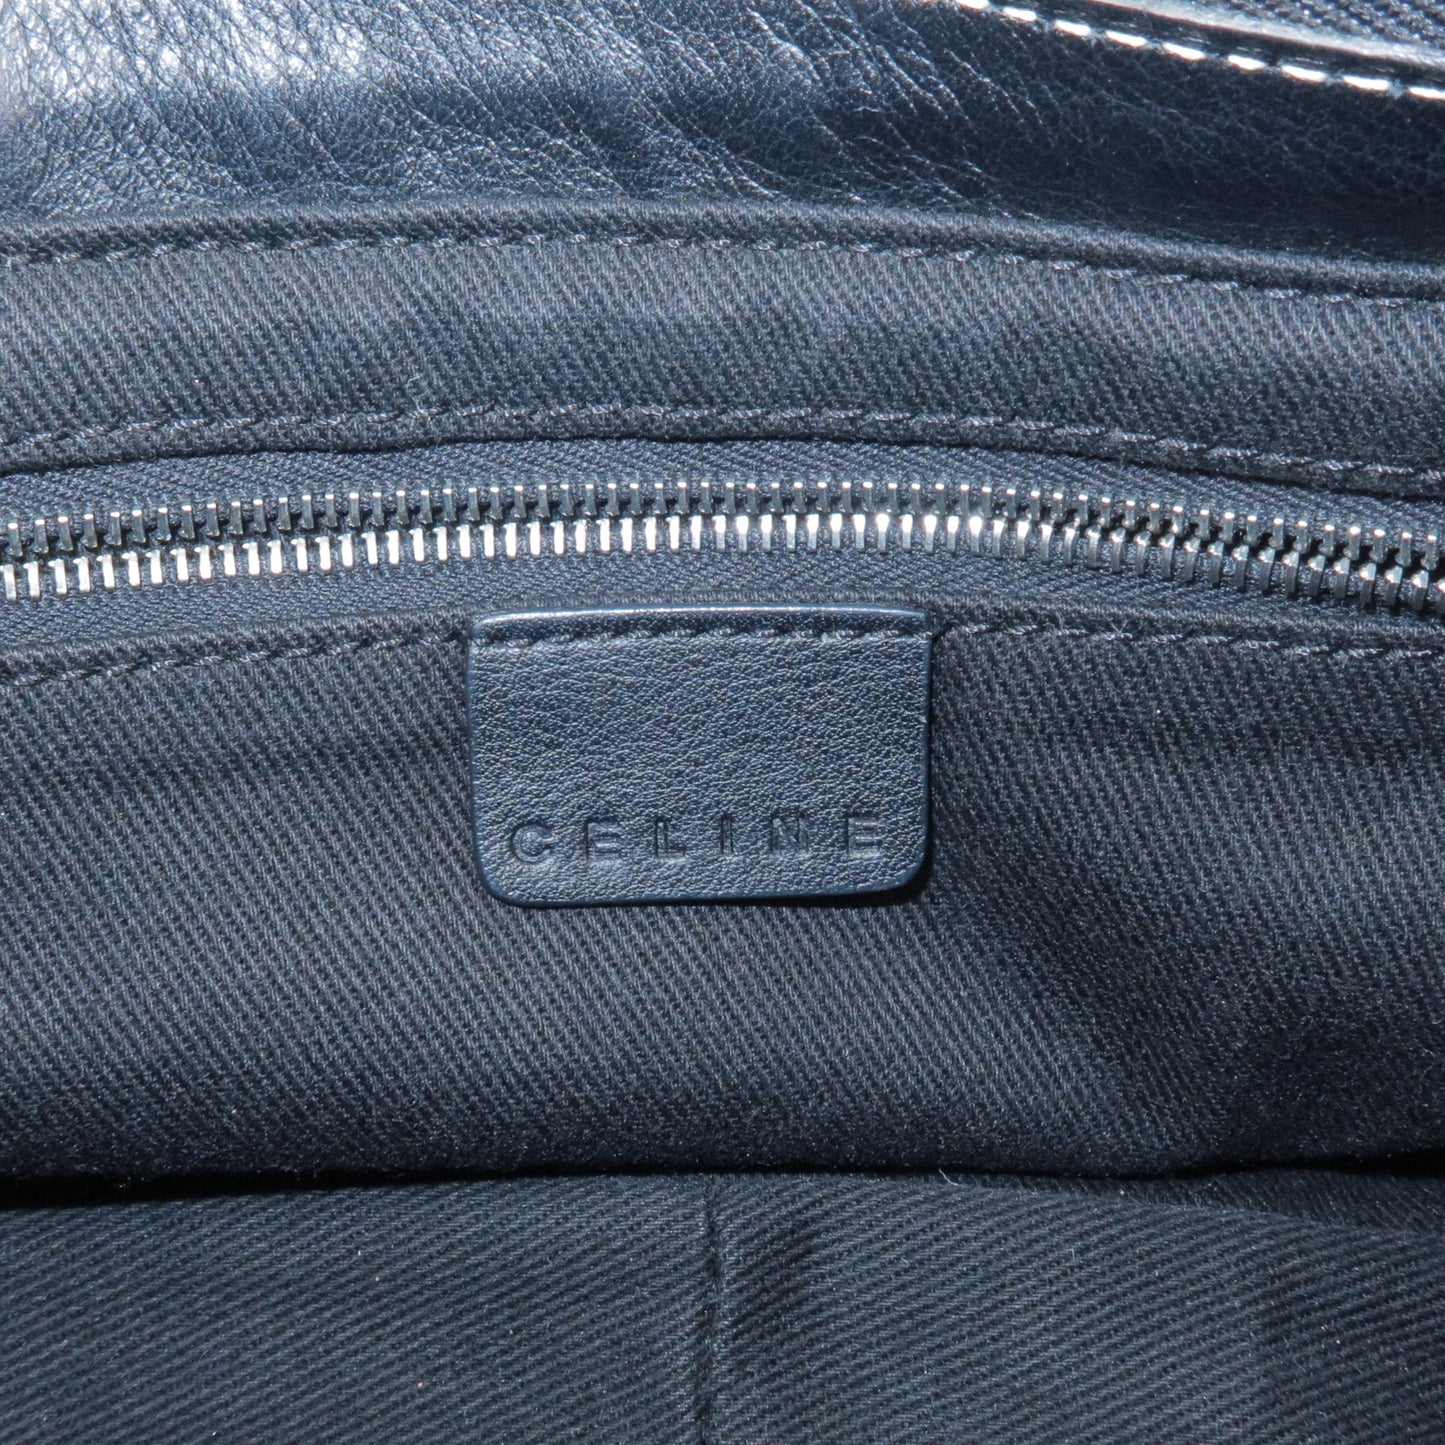 CELINE Macadam Canvas Leather Shoulder Bag Gray Black